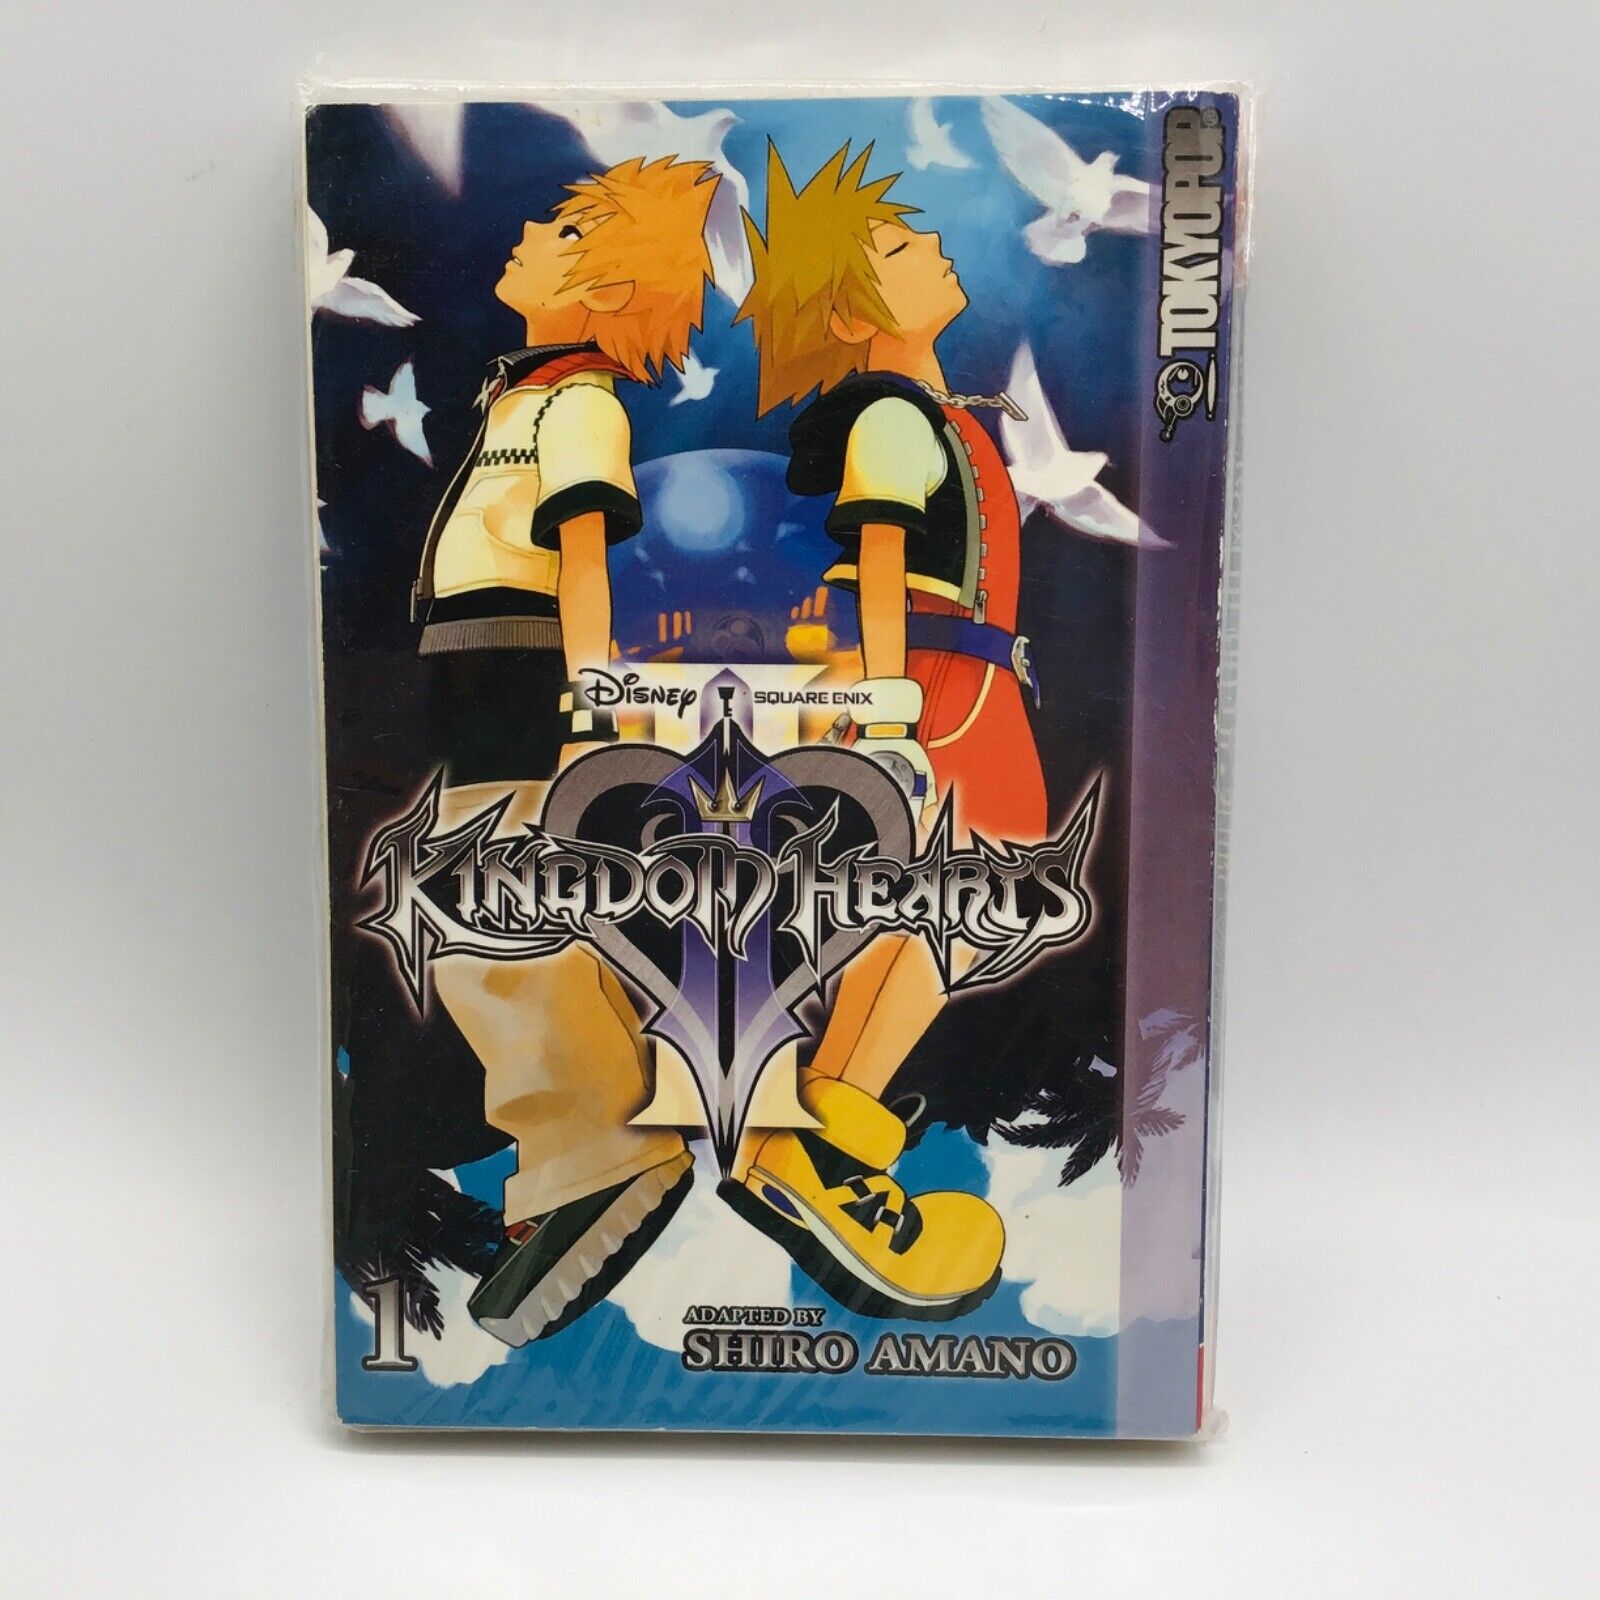 Kingdom Hearts Book Volume 1 Tokyopop Disney Square Enix By Shiro Amano Manga